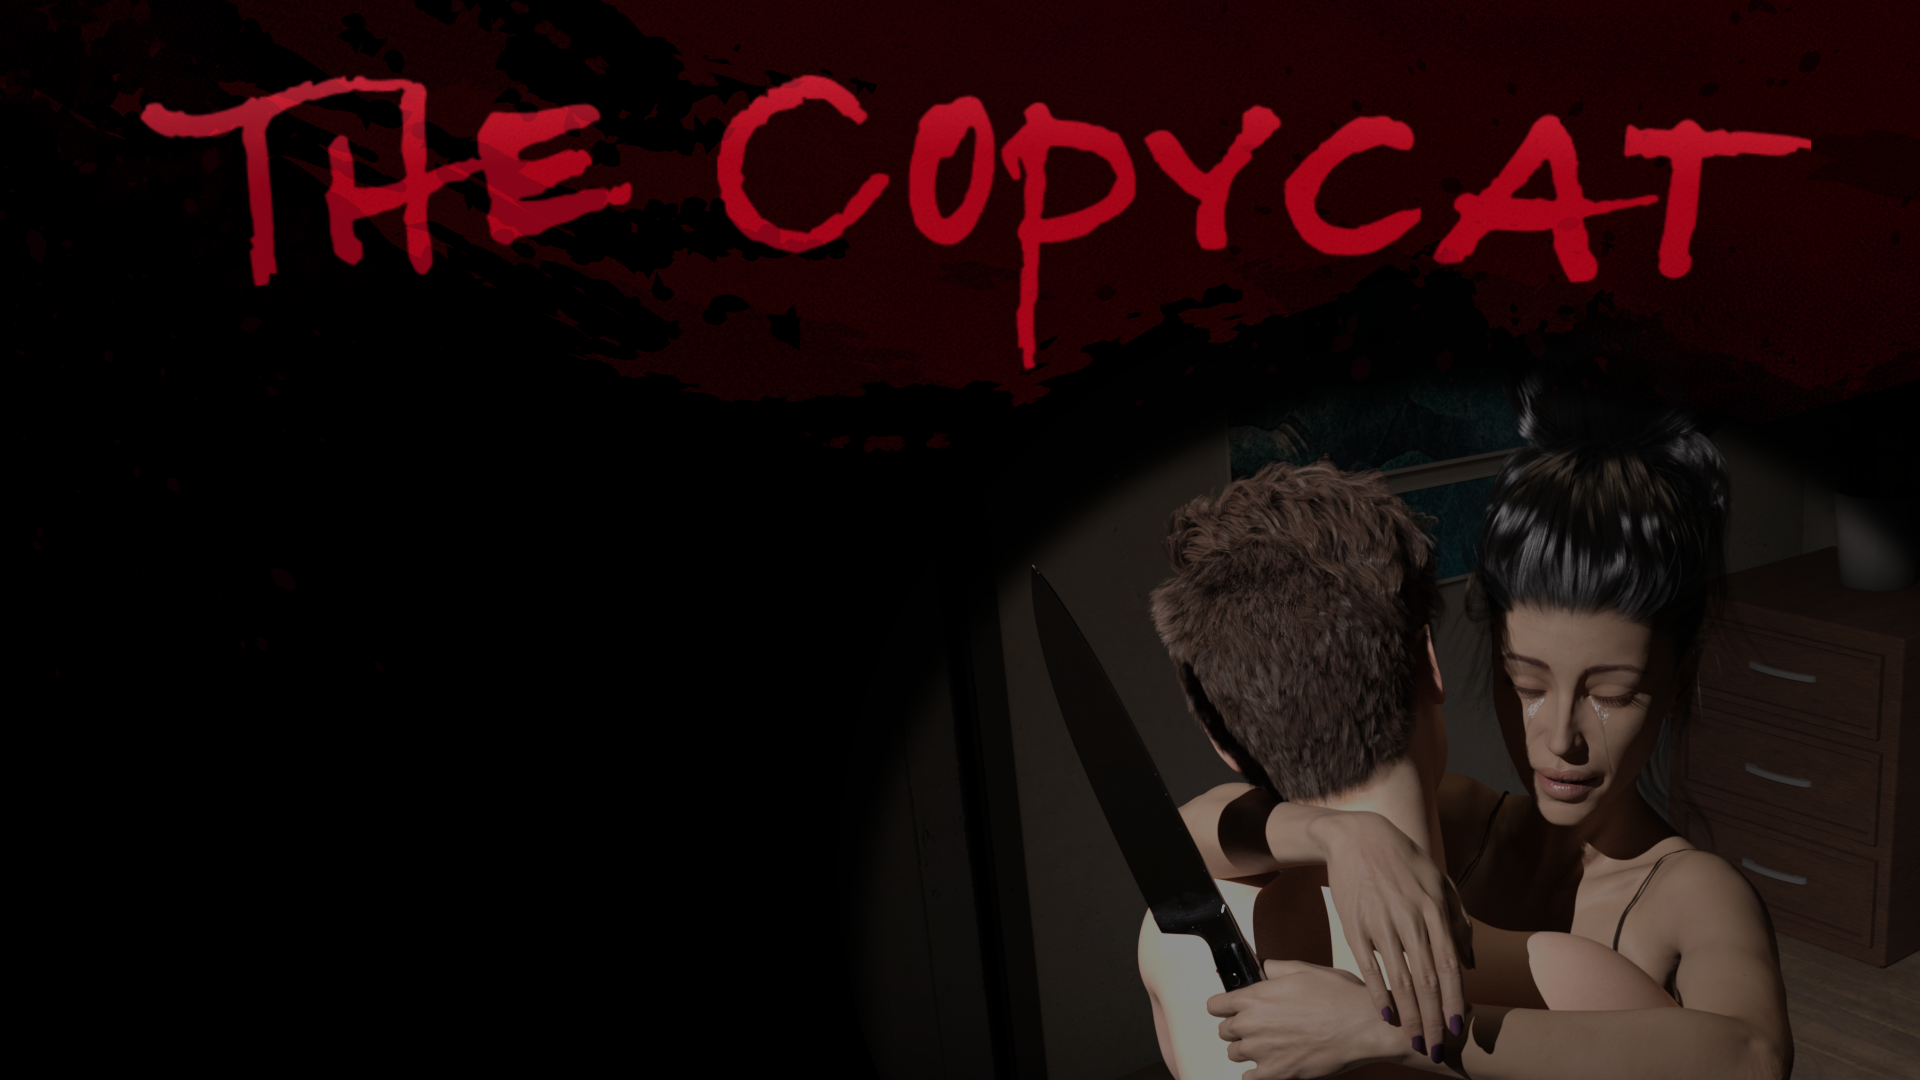 The Copycat [v0.0.2] [PiggyBackRide Productions] v0.0.2 - free game  download, reviews, mega - xGames